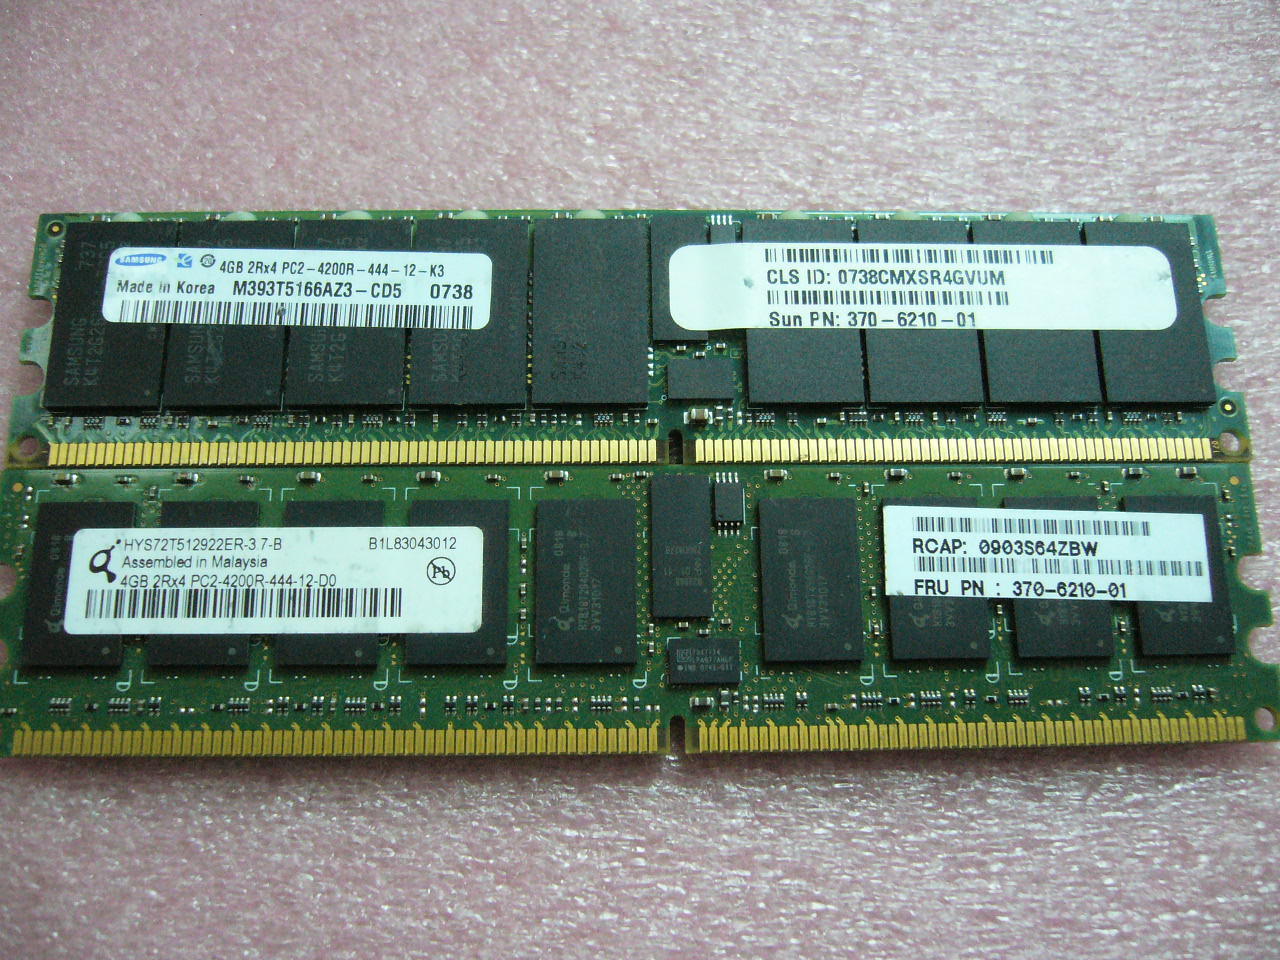 QTY 1x 4GB PC2-4200R 2Rx4 DDR2 533MHz ECC Registered Memory Sun PN 370-6210